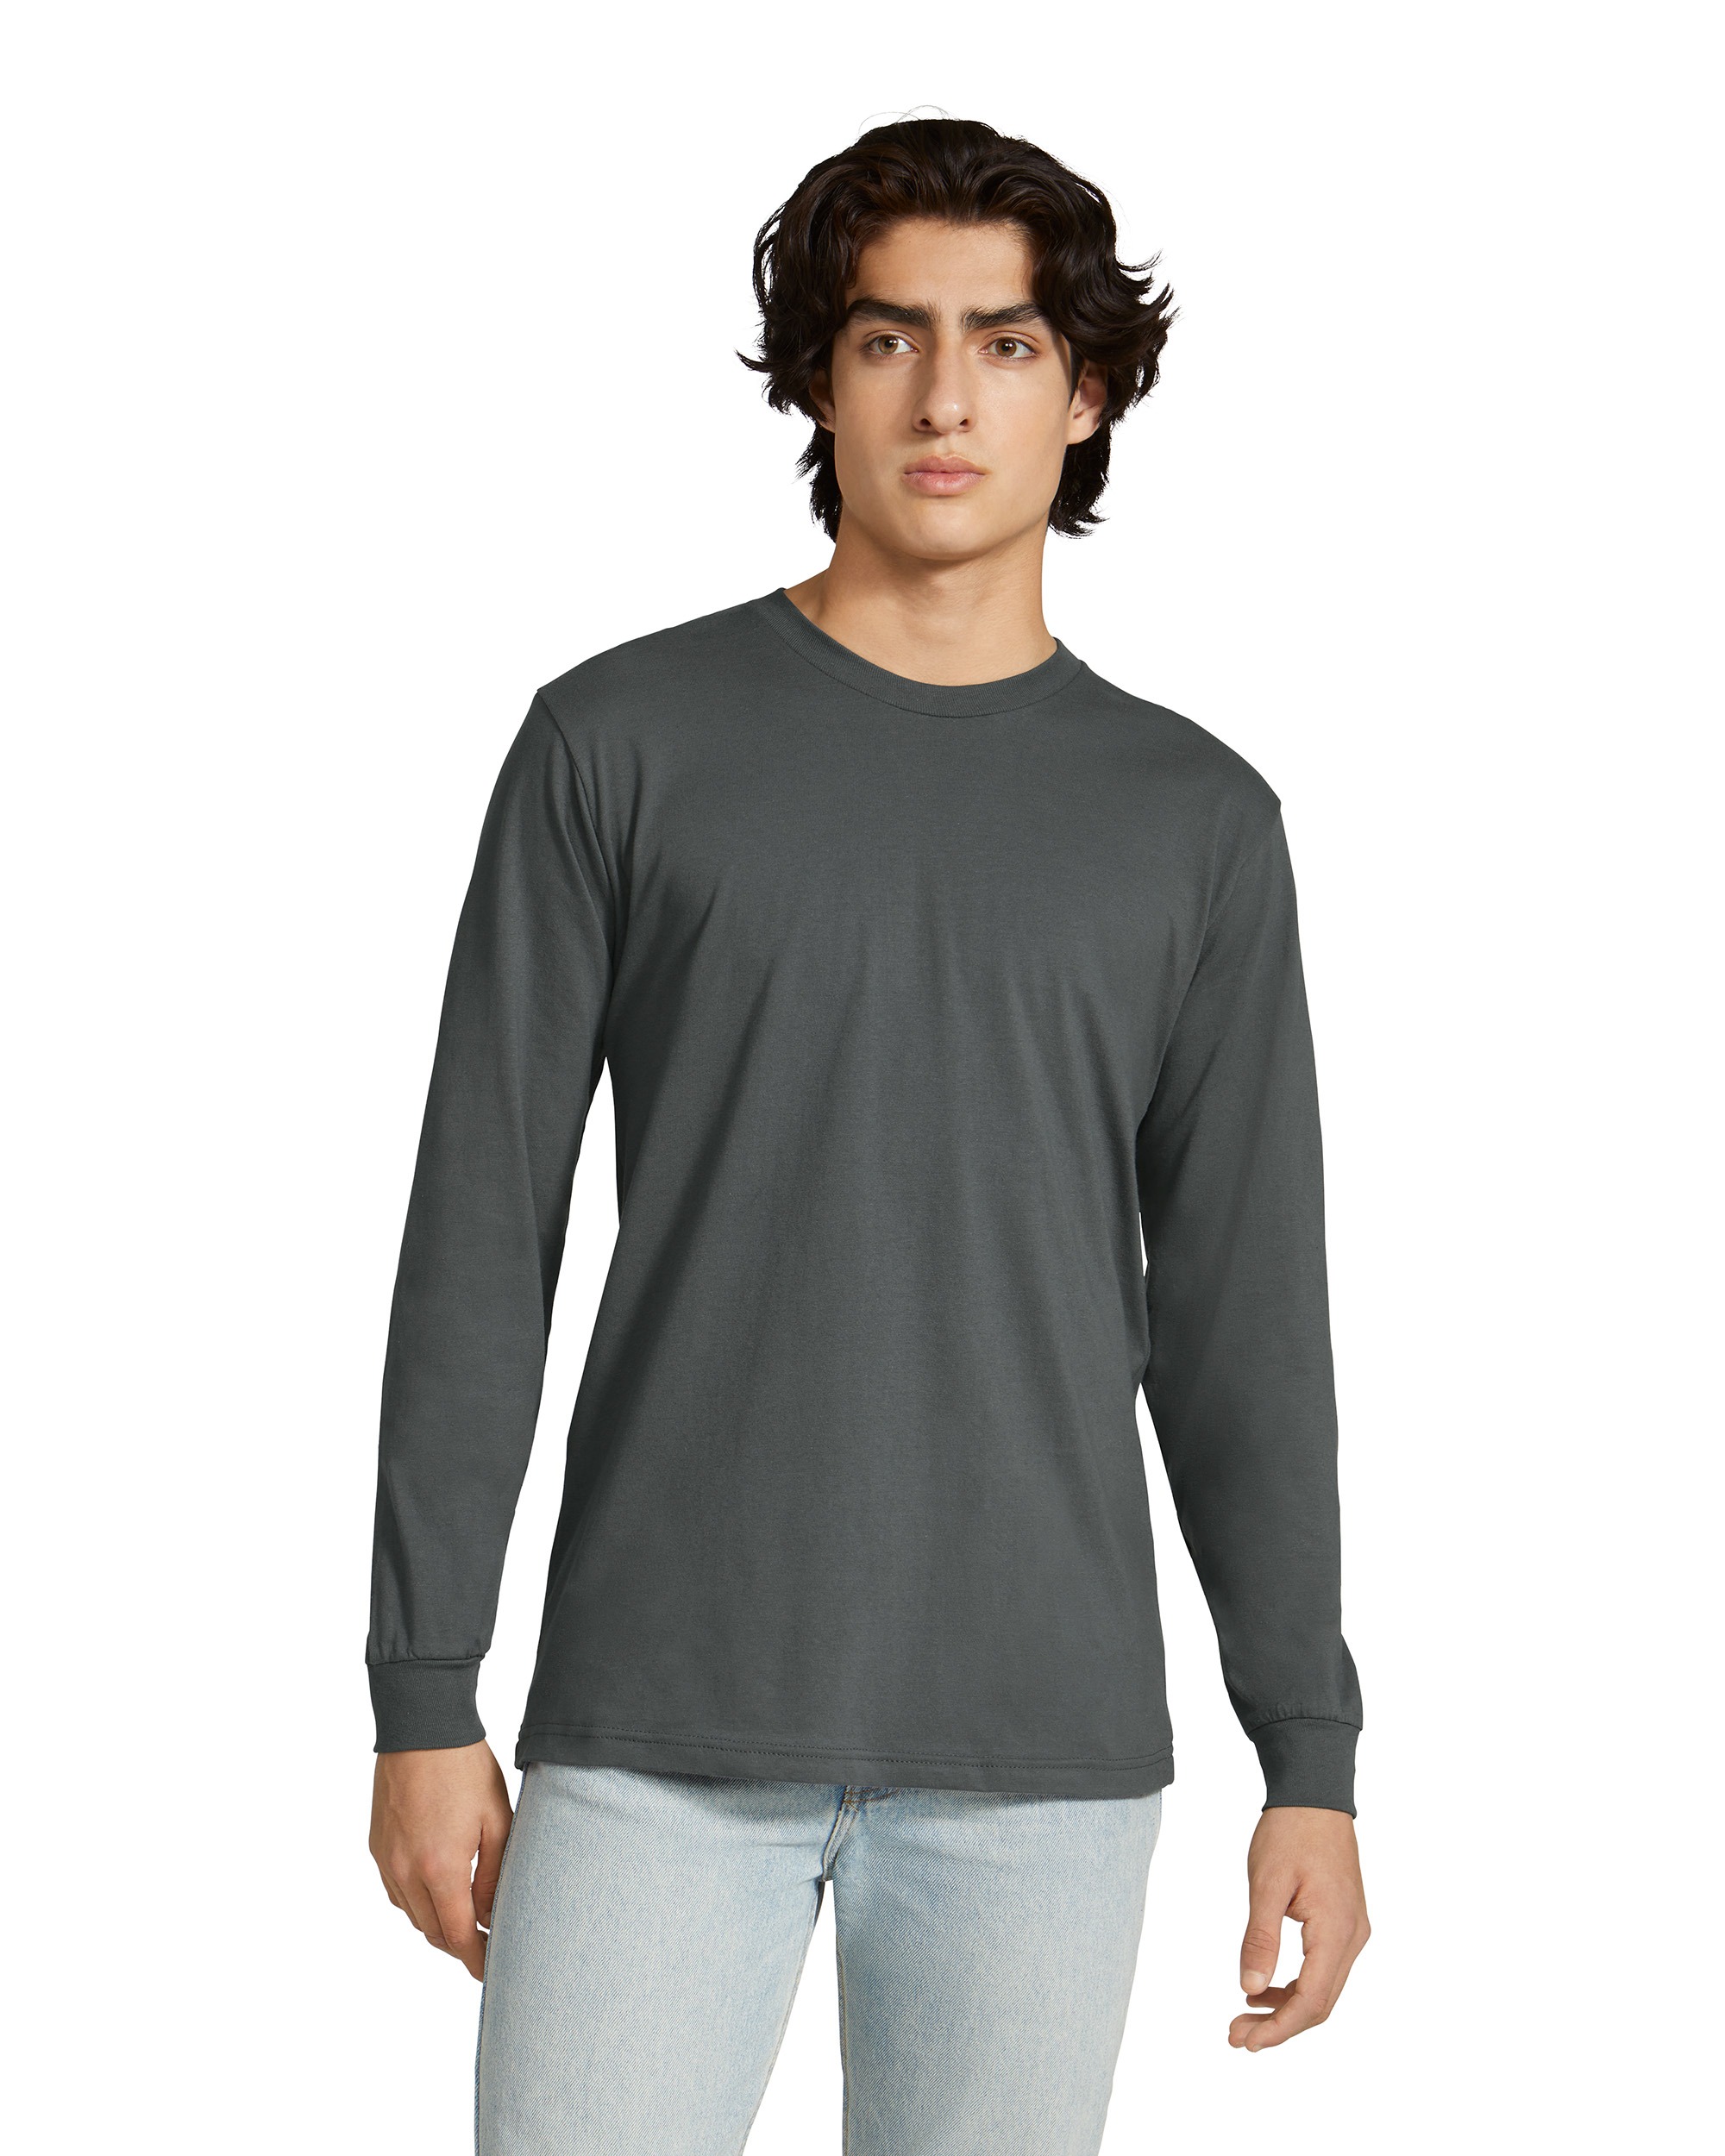 American Apparel® 2007 Fine Jersey Unisex Long Sleeve T-Shirt